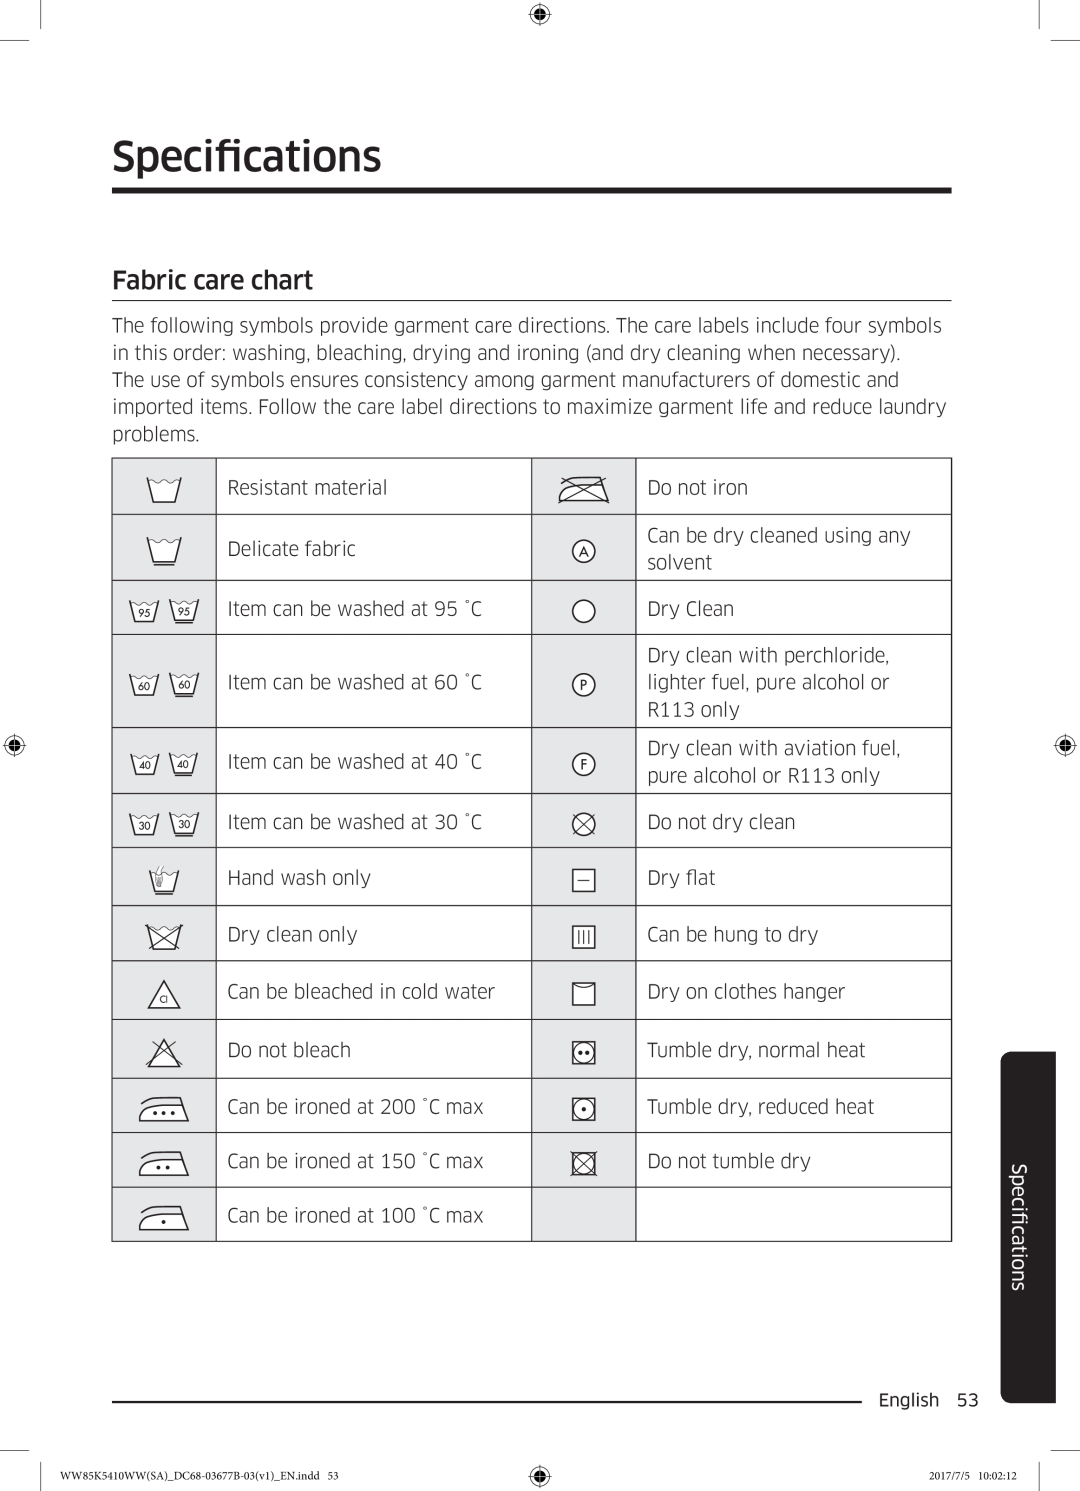 Samsung WW90K5233WW/SV manual Specifications, Fabric care chart, ficationsSpeci 